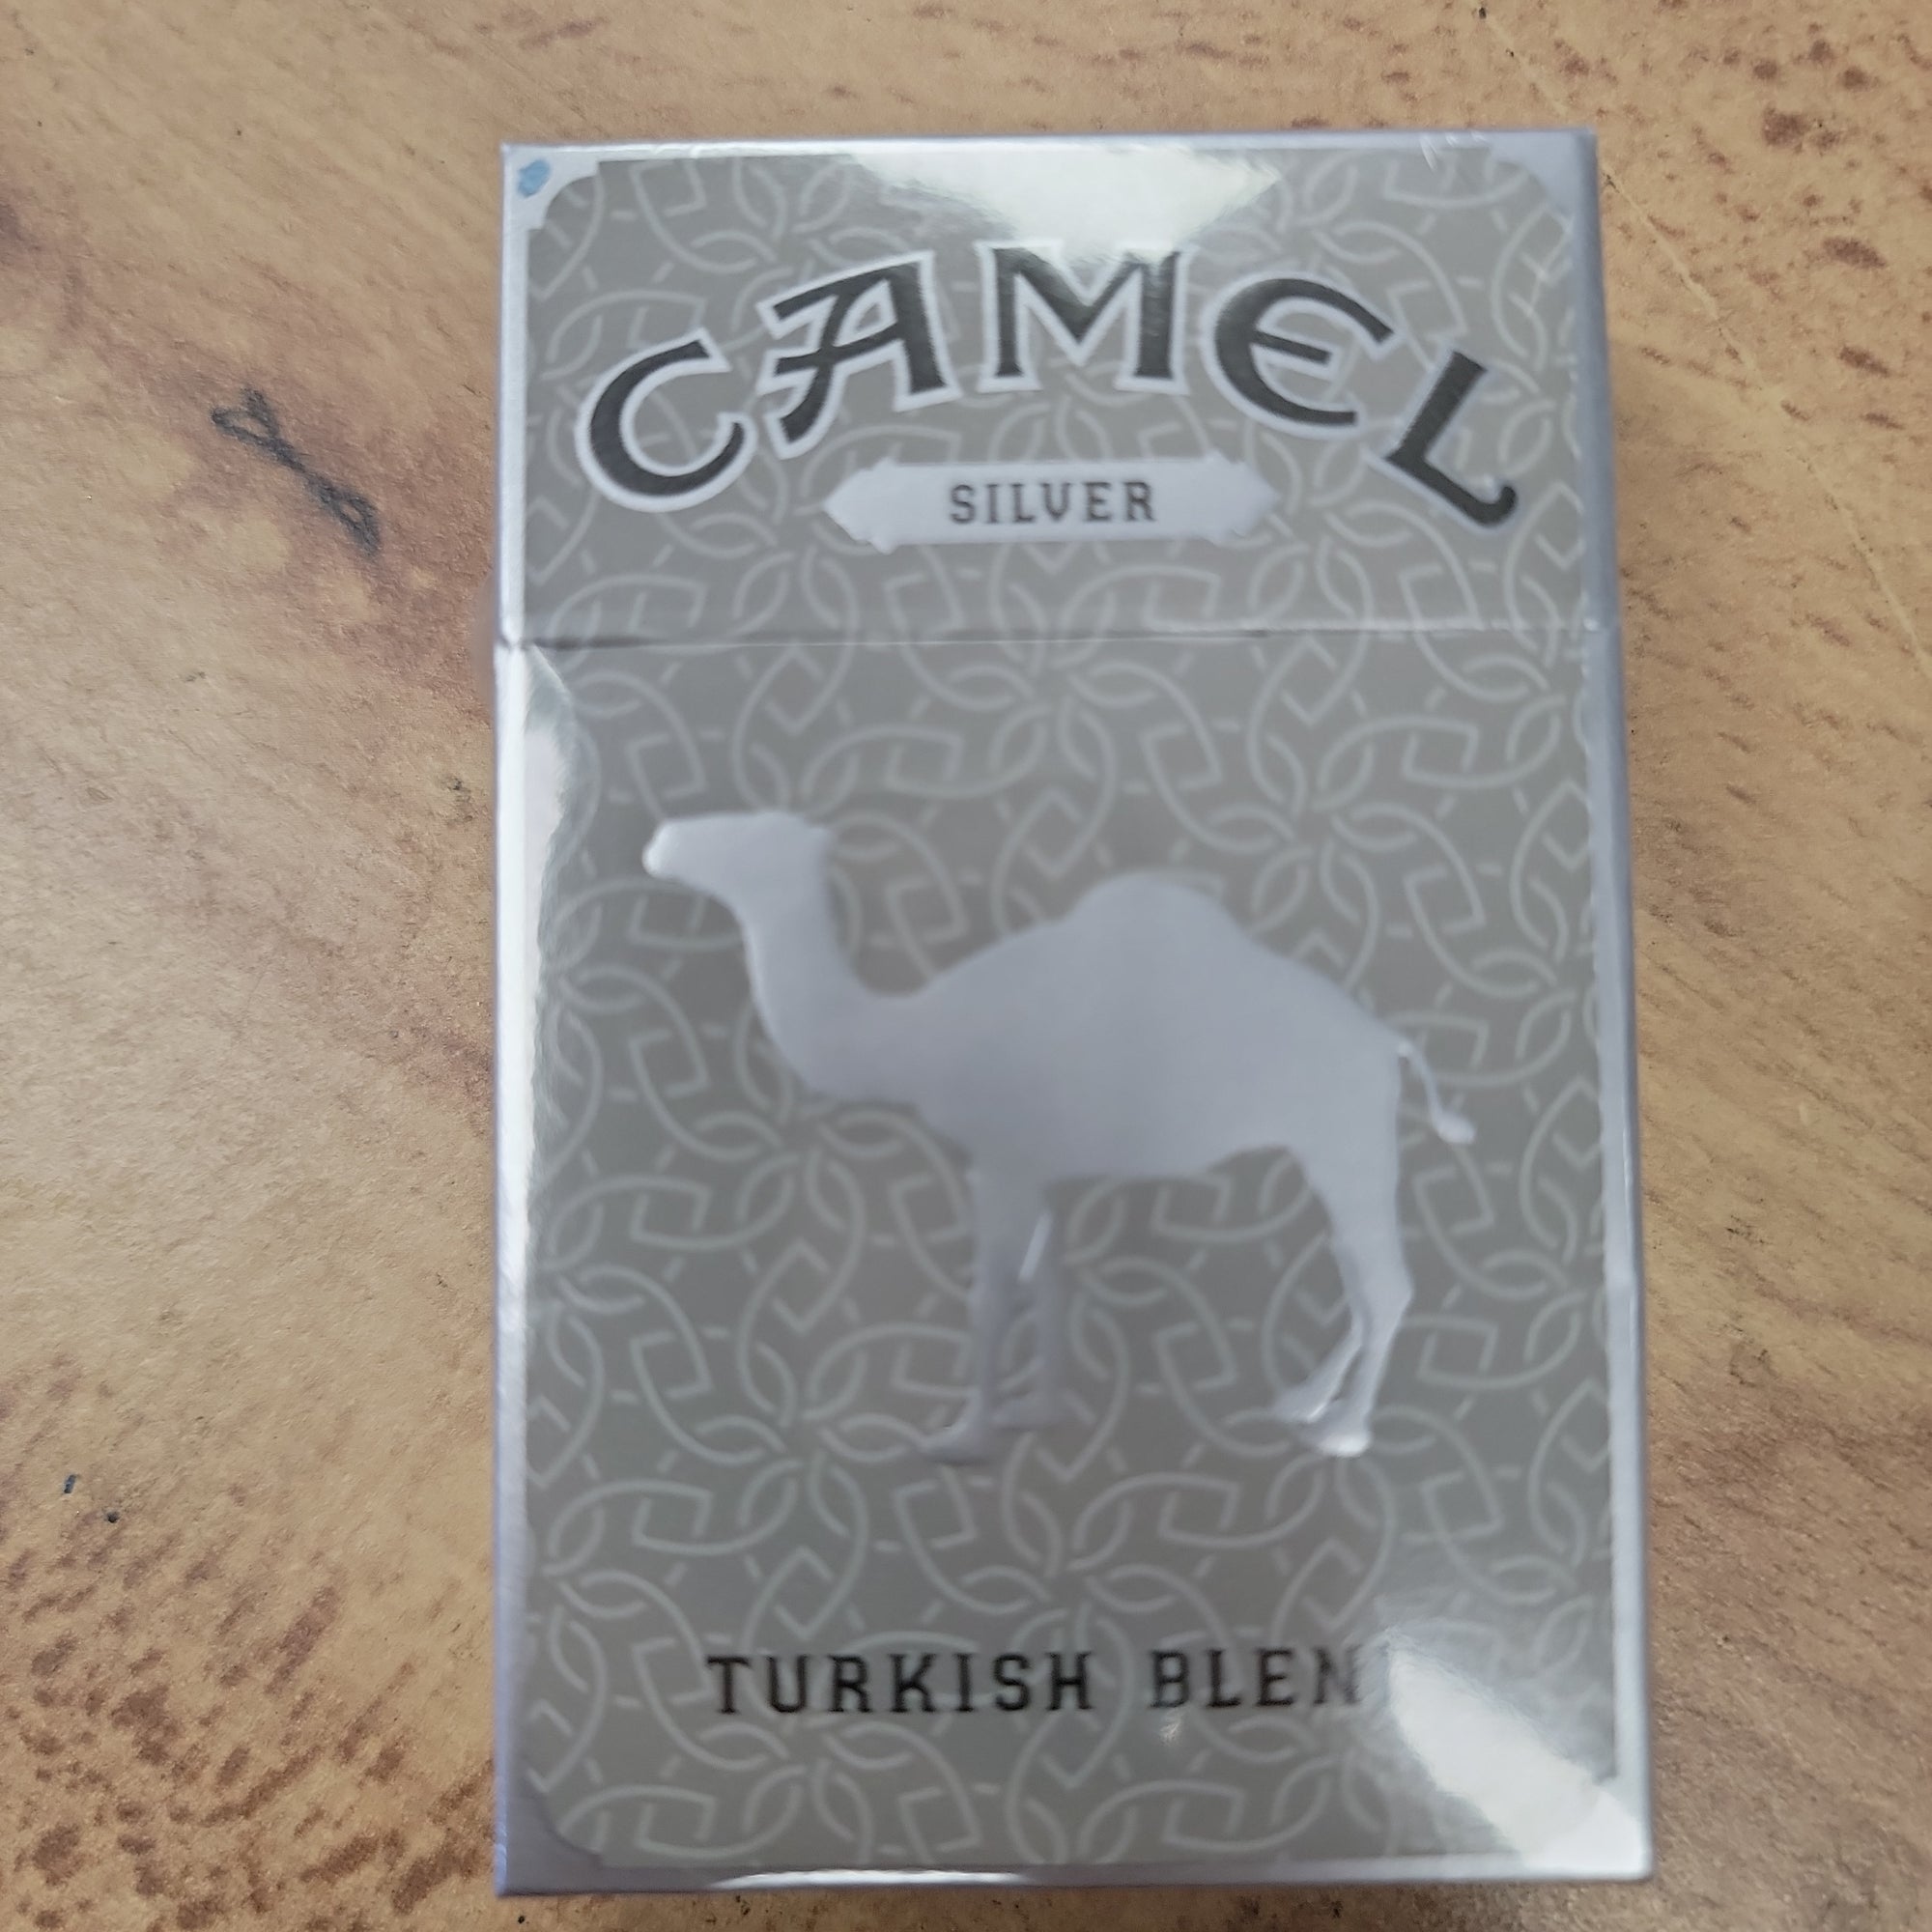 Camel silver turk blend